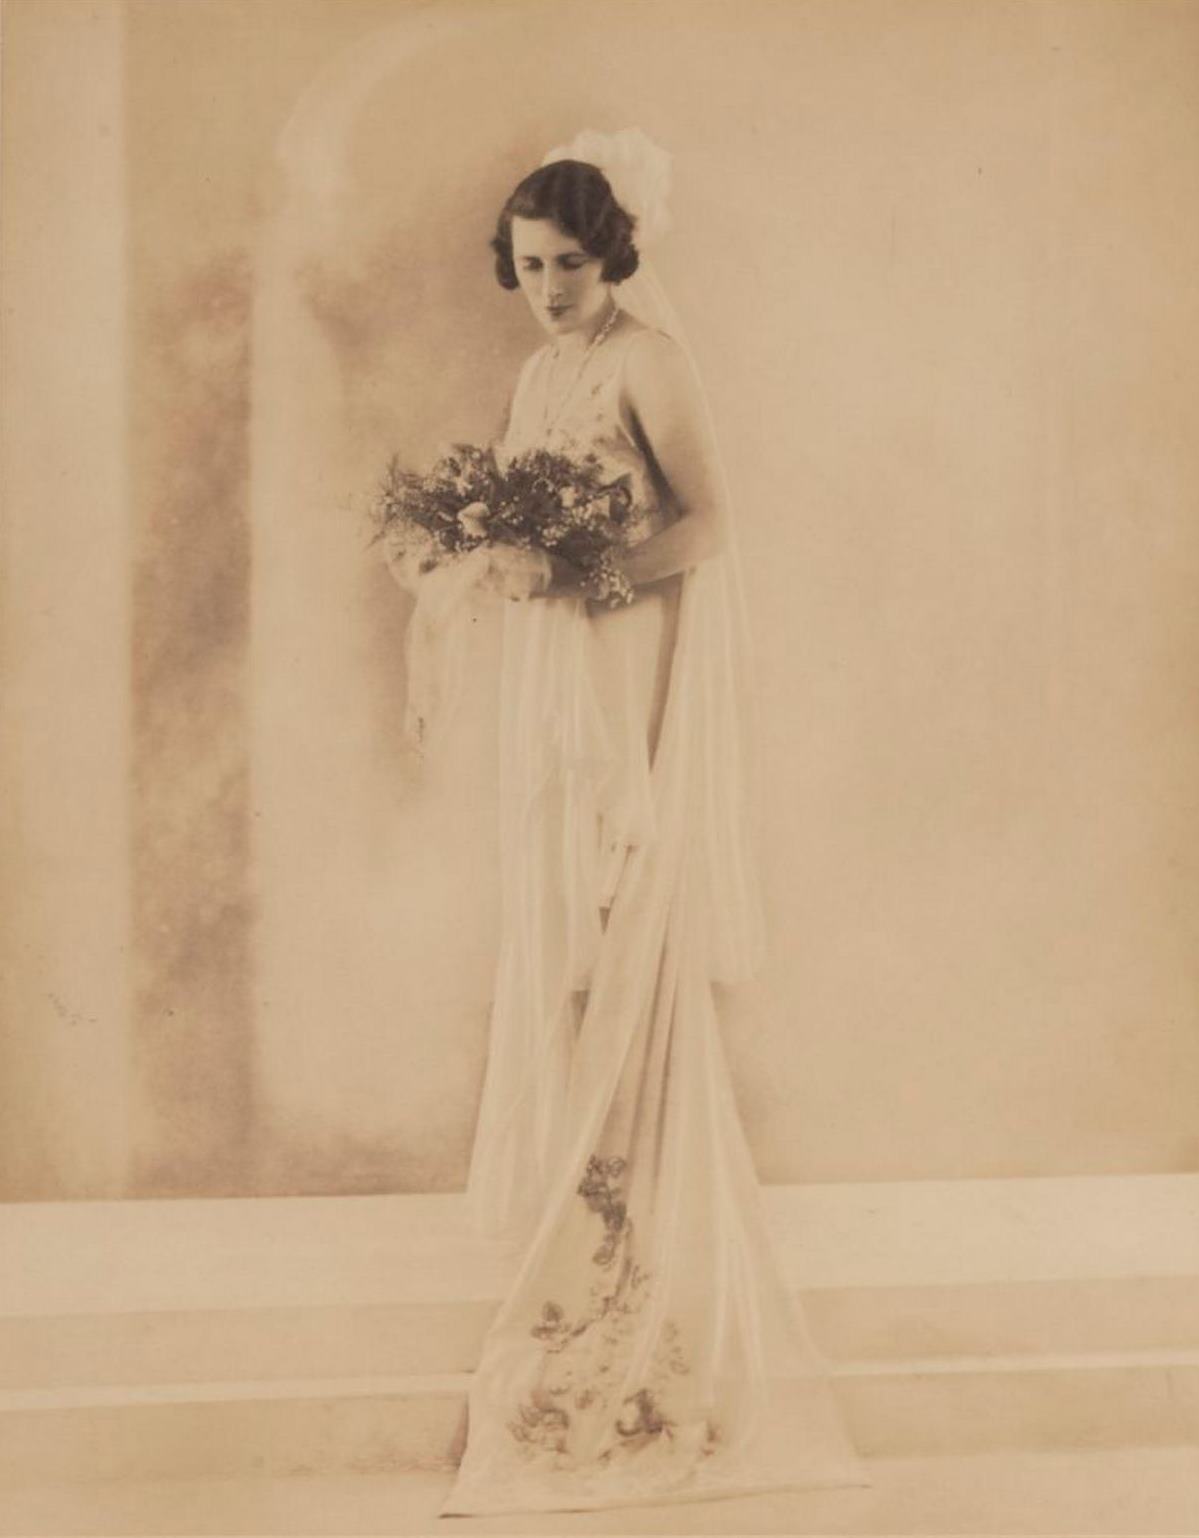 Studio portrait of Dora Sheller, previously Walford, in court dress, 1930 / Bassano